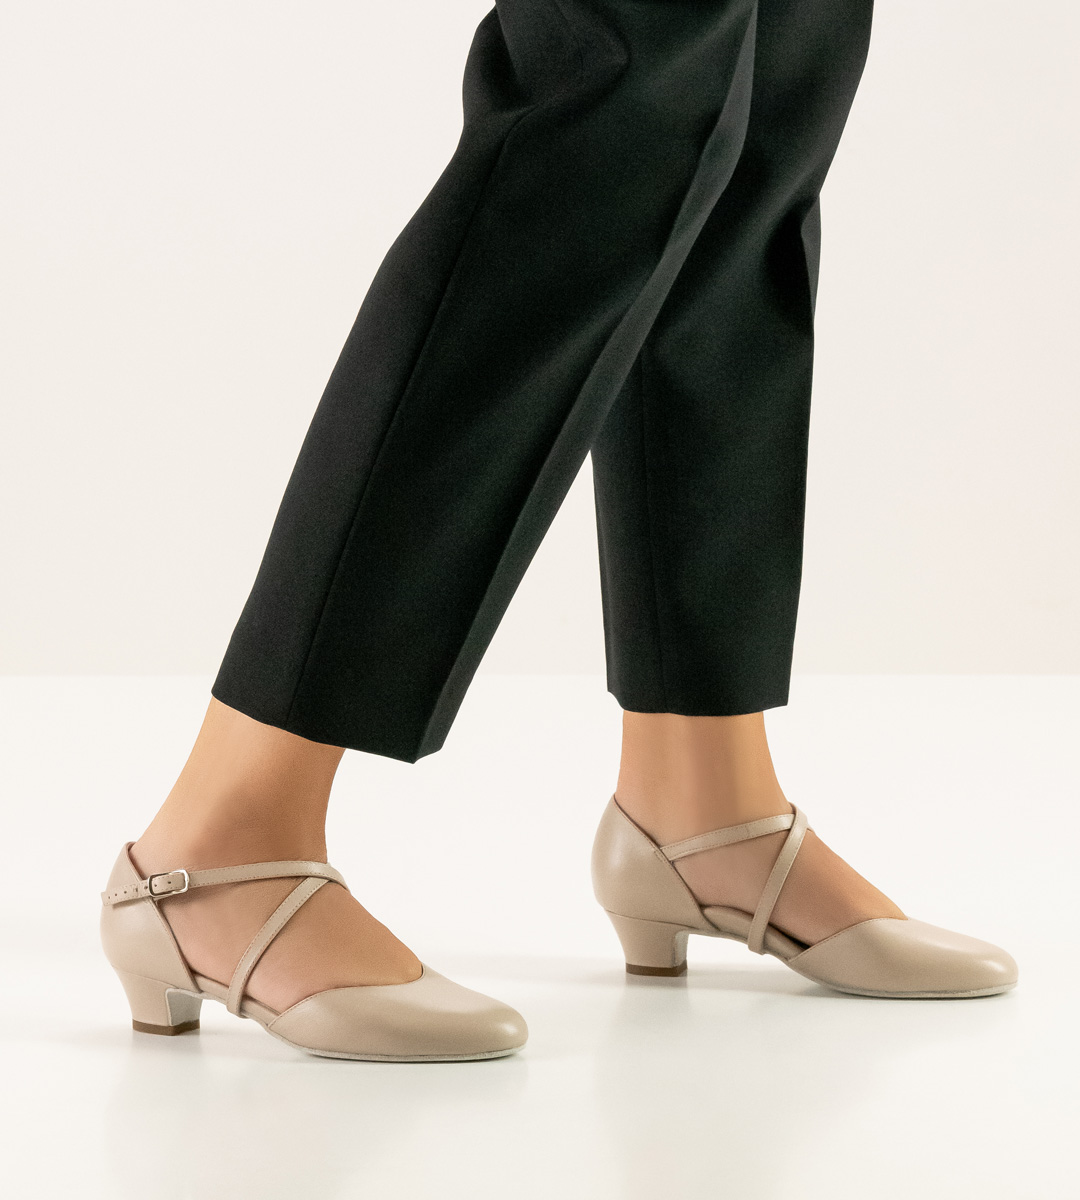 Werner Kern ladies' dance shoe in beige combined with black trousers